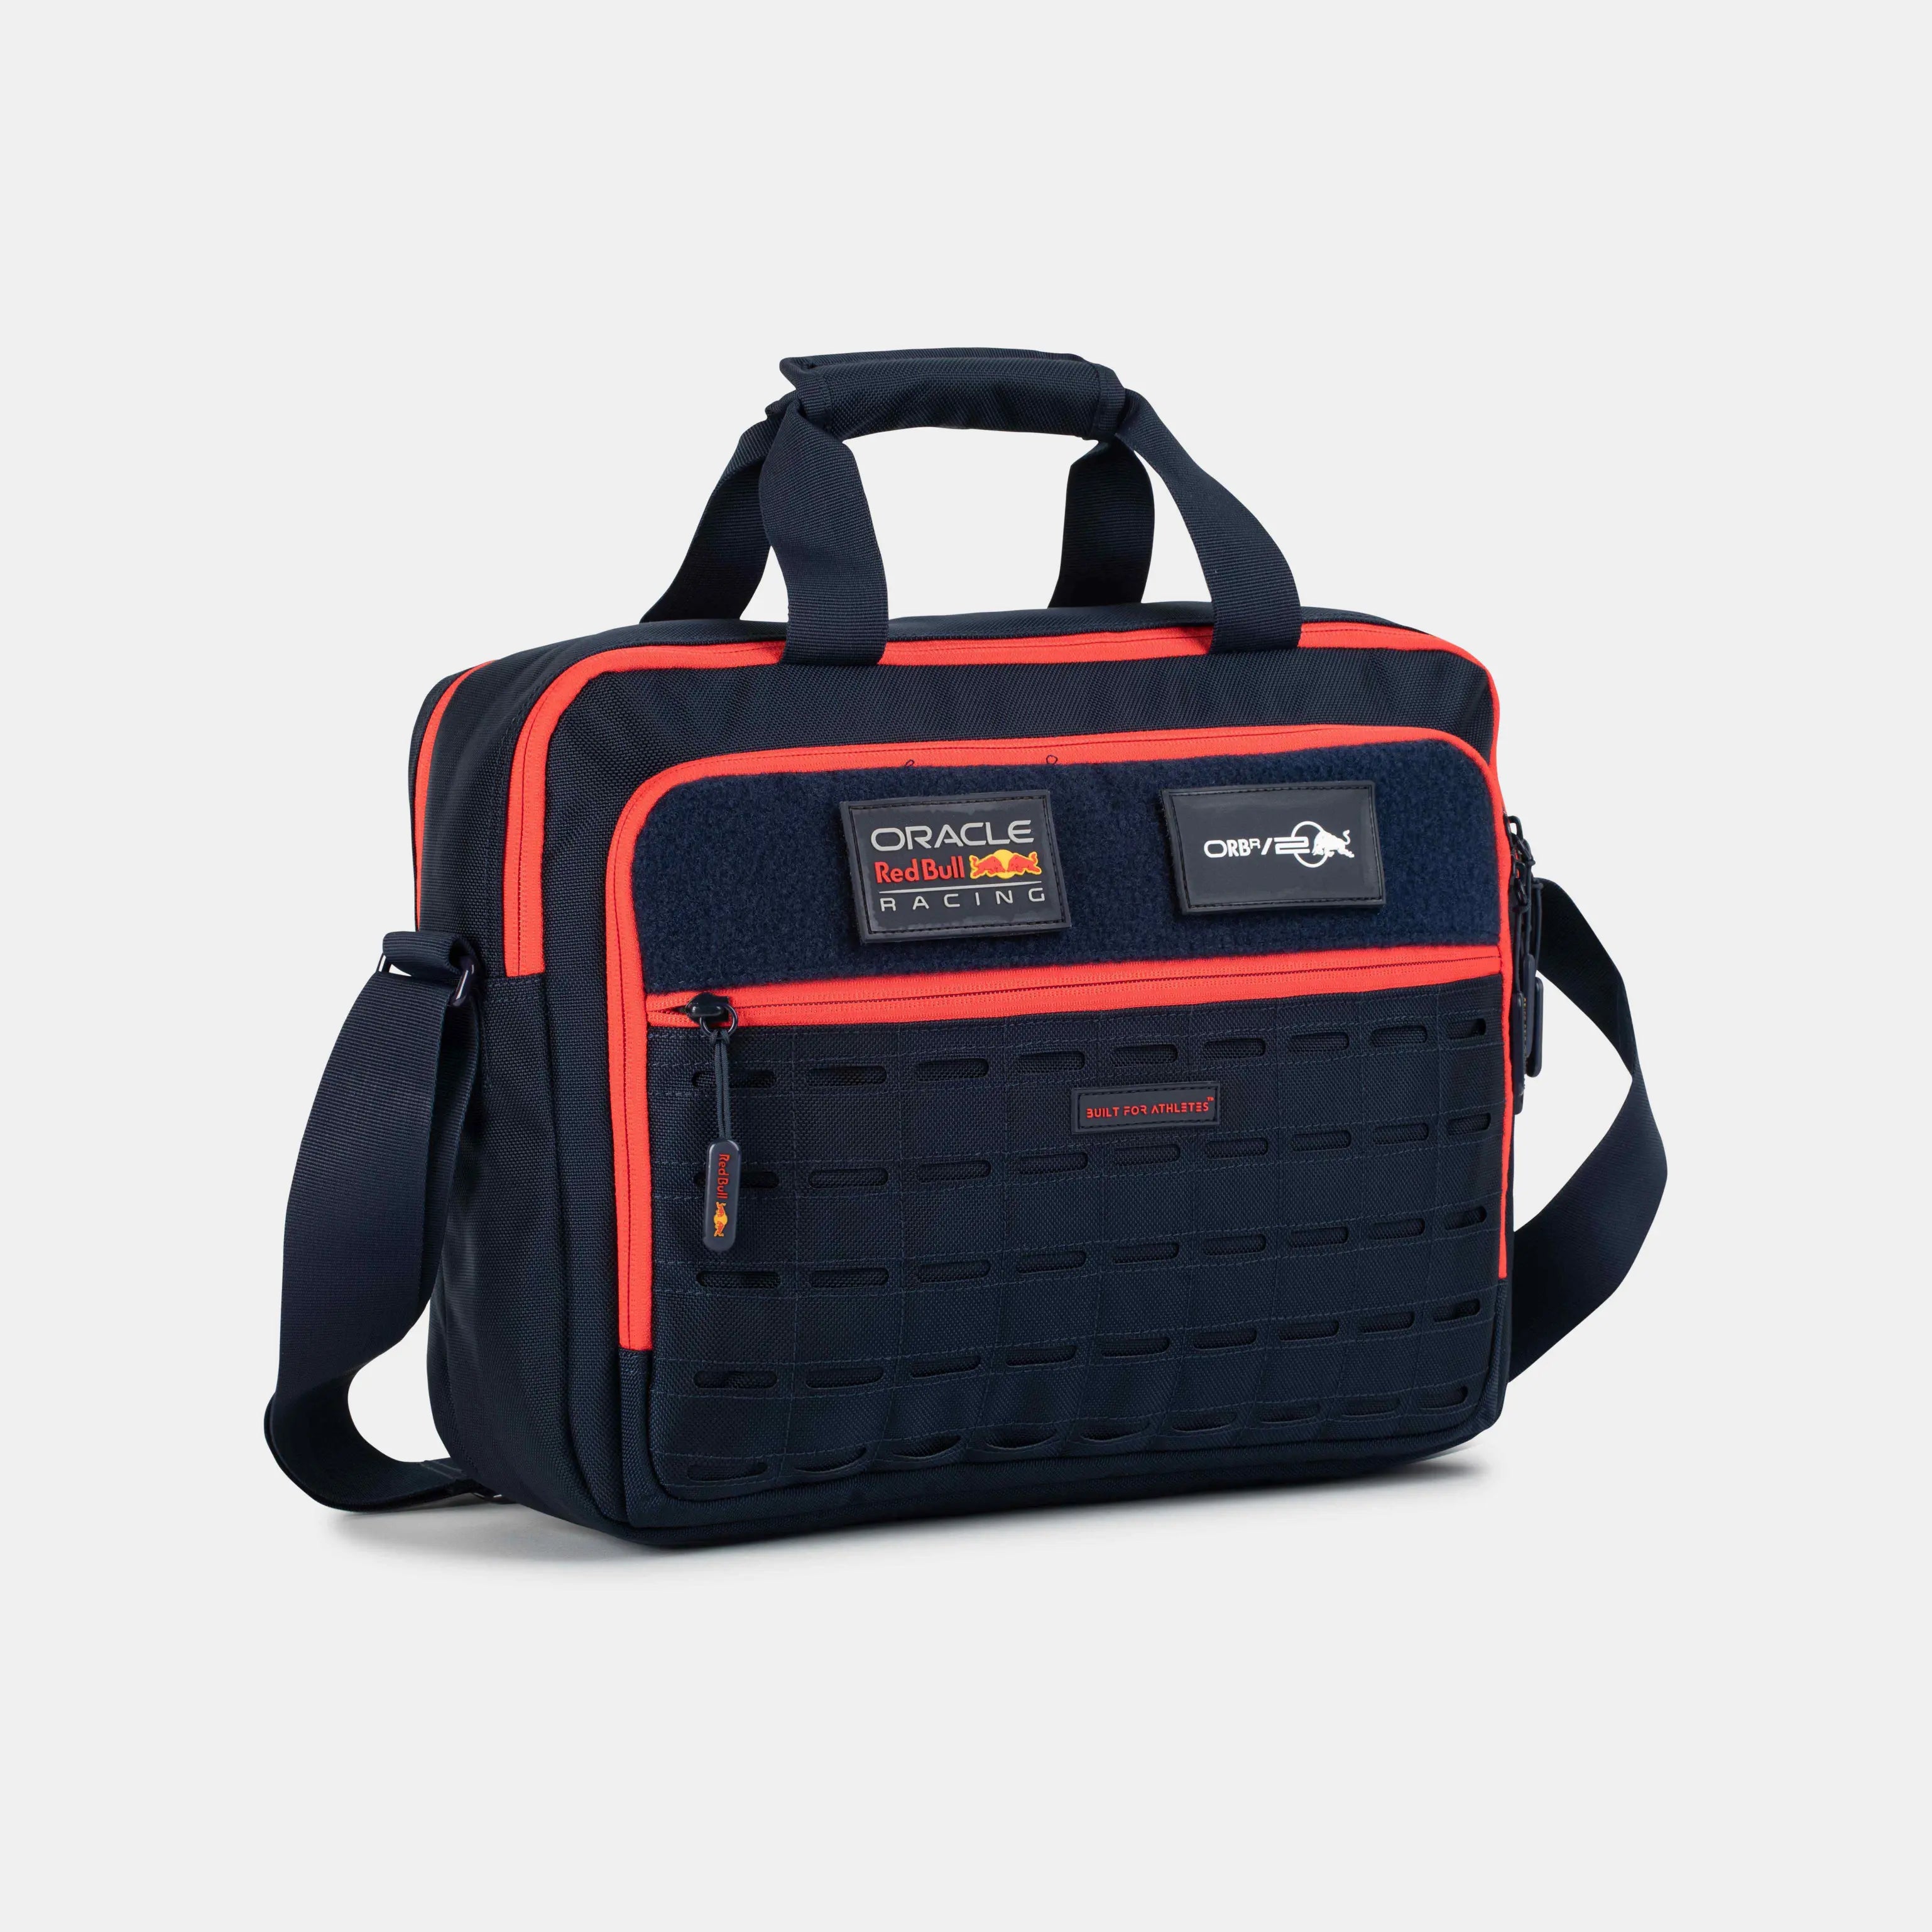 Built For Athletes Backpacks Red Bull Racing Laptop Bag